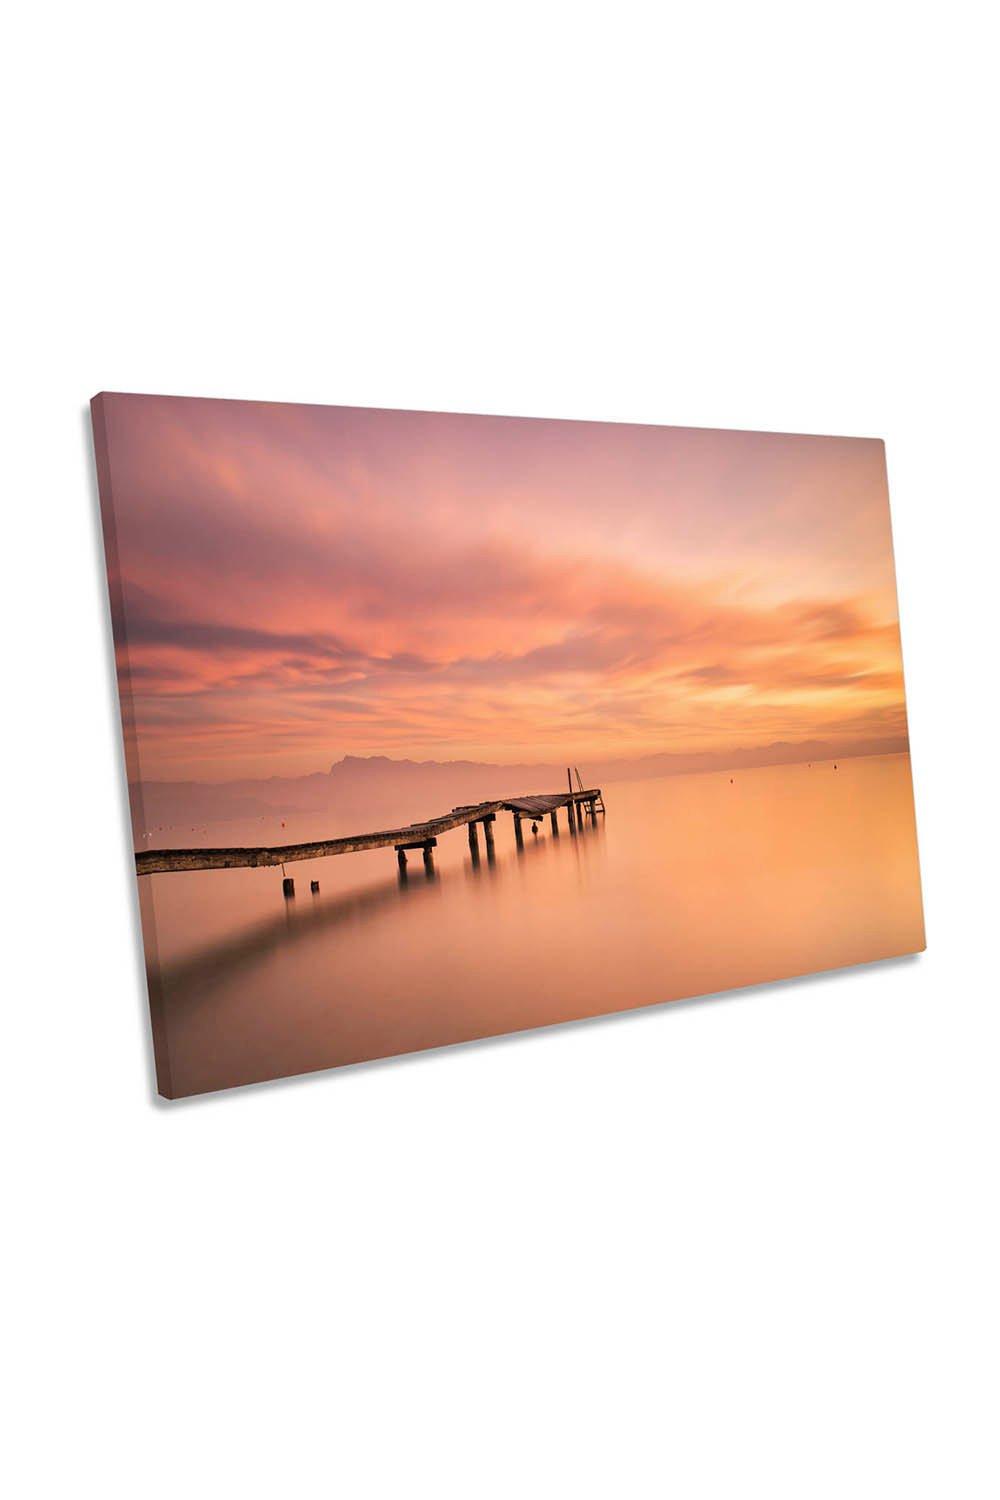 Garda Lake Pier Jetty Sunset Tranquillity Canvas Wall Art Picture Print